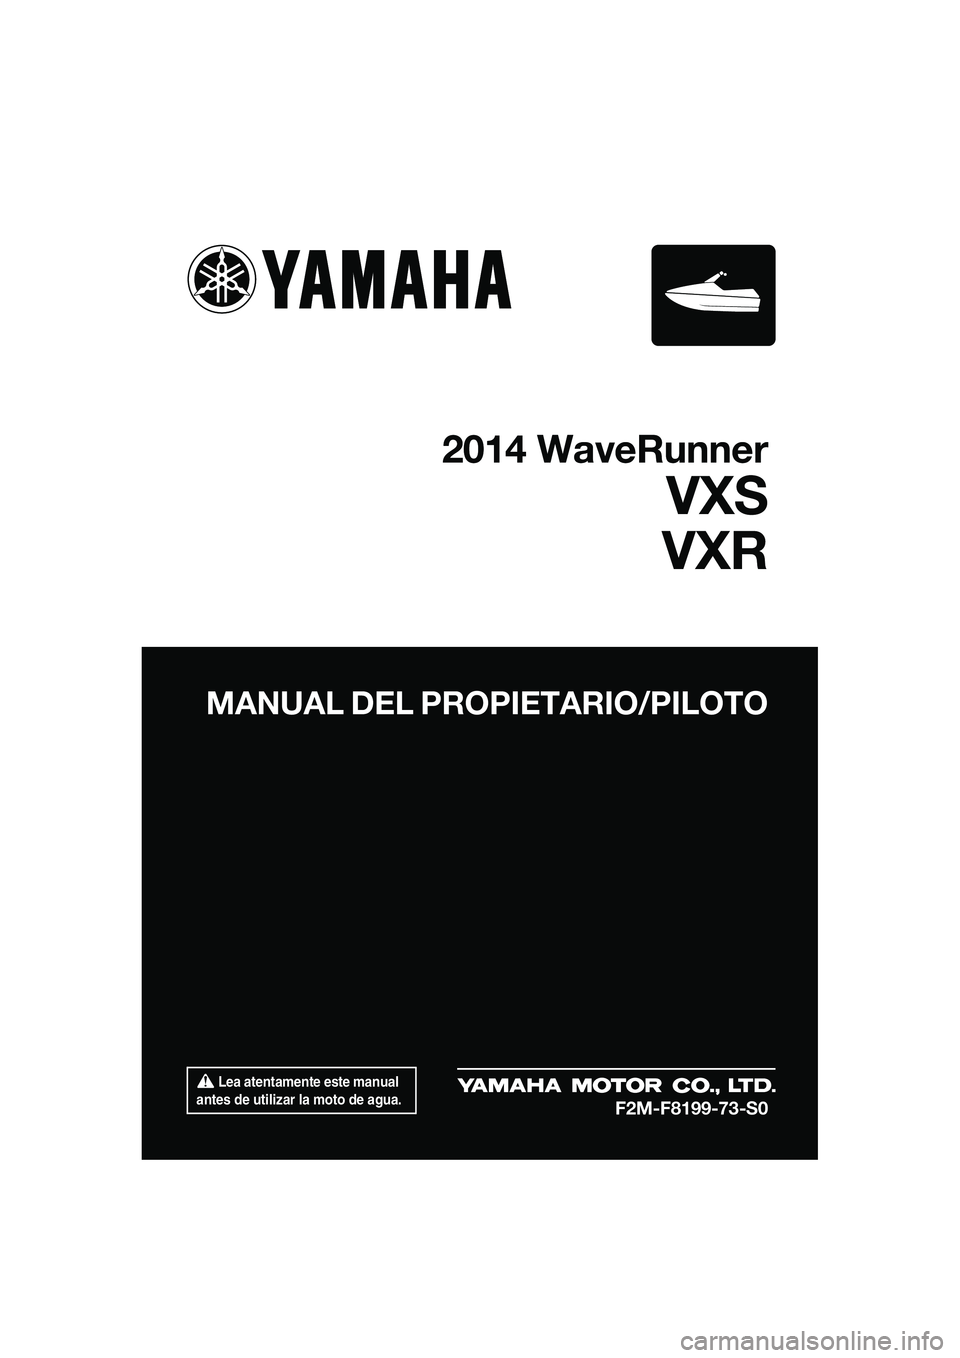 YAMAHA VXR 2014  Manuale de Empleo (in Spanish)  Lea atentamente este manual 
antes de utilizar la moto de agua.
MANUAL DEL PROPIETARIO/PILOTO
2014 WaveRunner
VXS
VXR
F2M-F8199-73-S0
UF2M73S0.book  Page 1  Friday, August 2, 2013  11:33 AM 